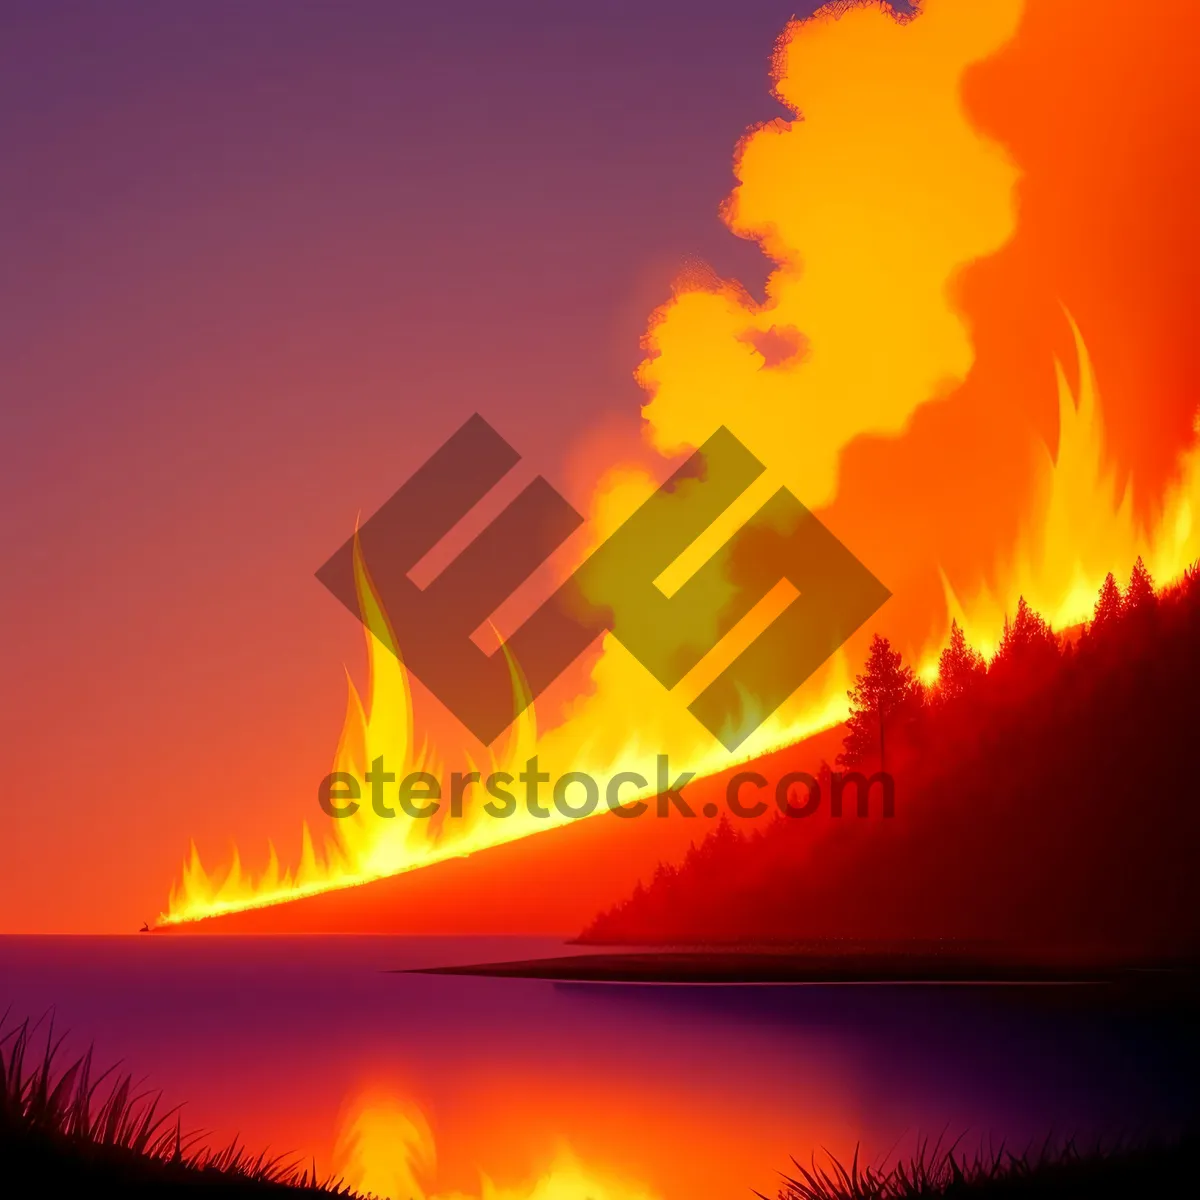 Picture of Radiant Celestial Blaze: A Vibrant Sunset's Fiery Horizon